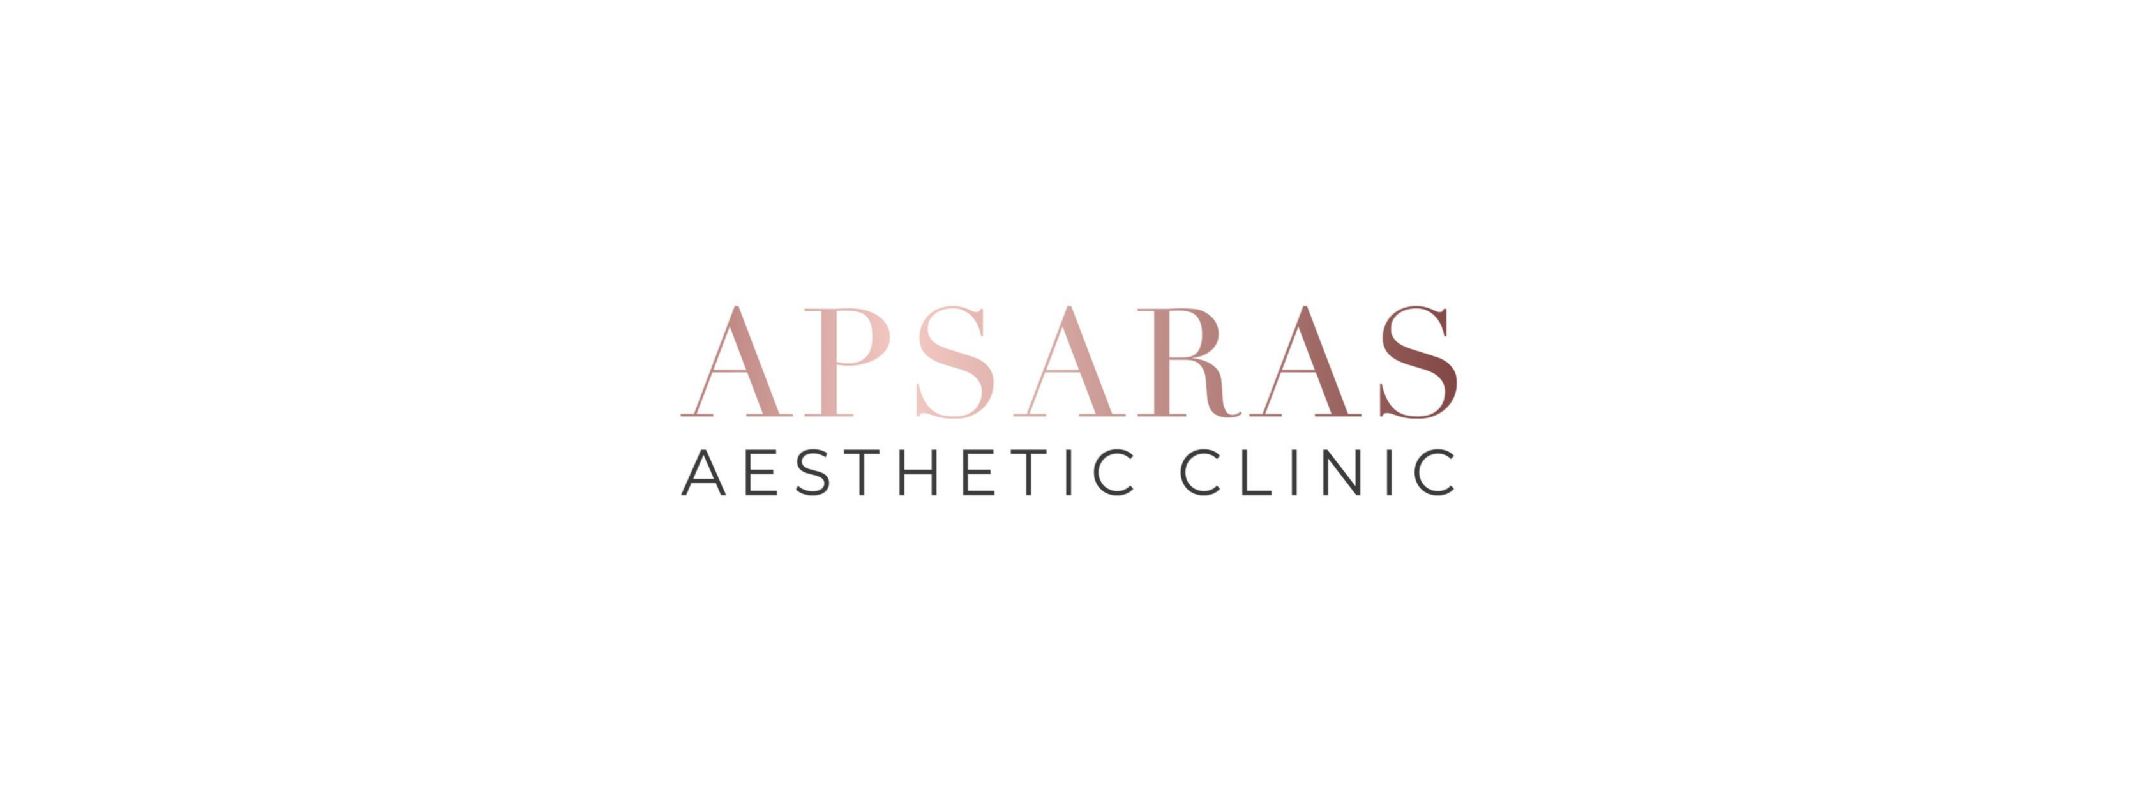 Apsaras Aesthetic Clinic Banner